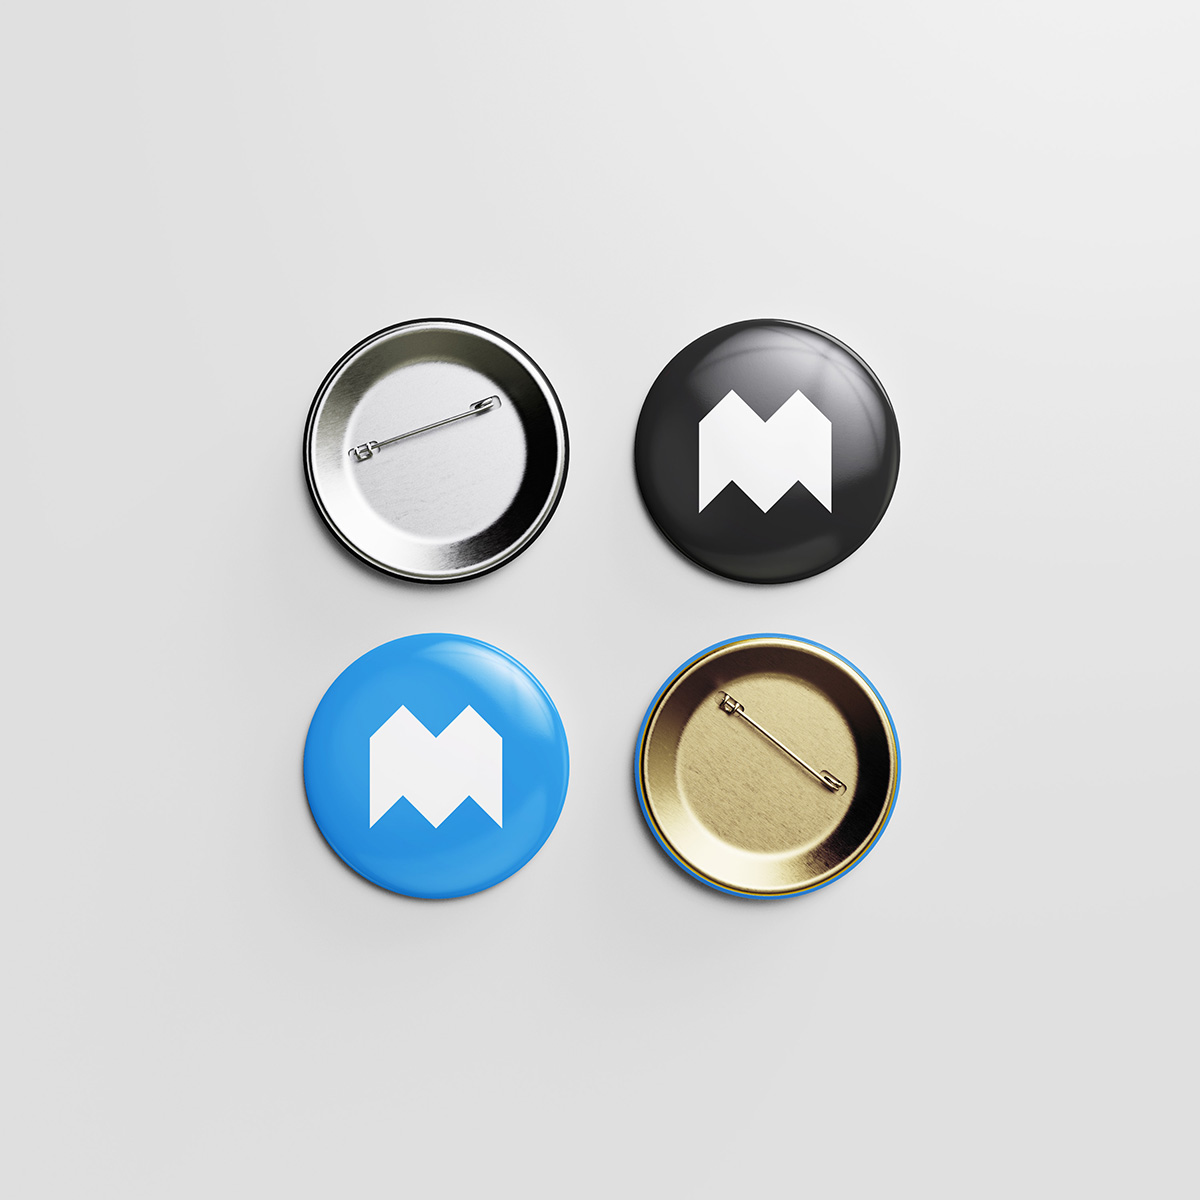 Free pin button mockup - Mockups Design | Free Premium Mockups